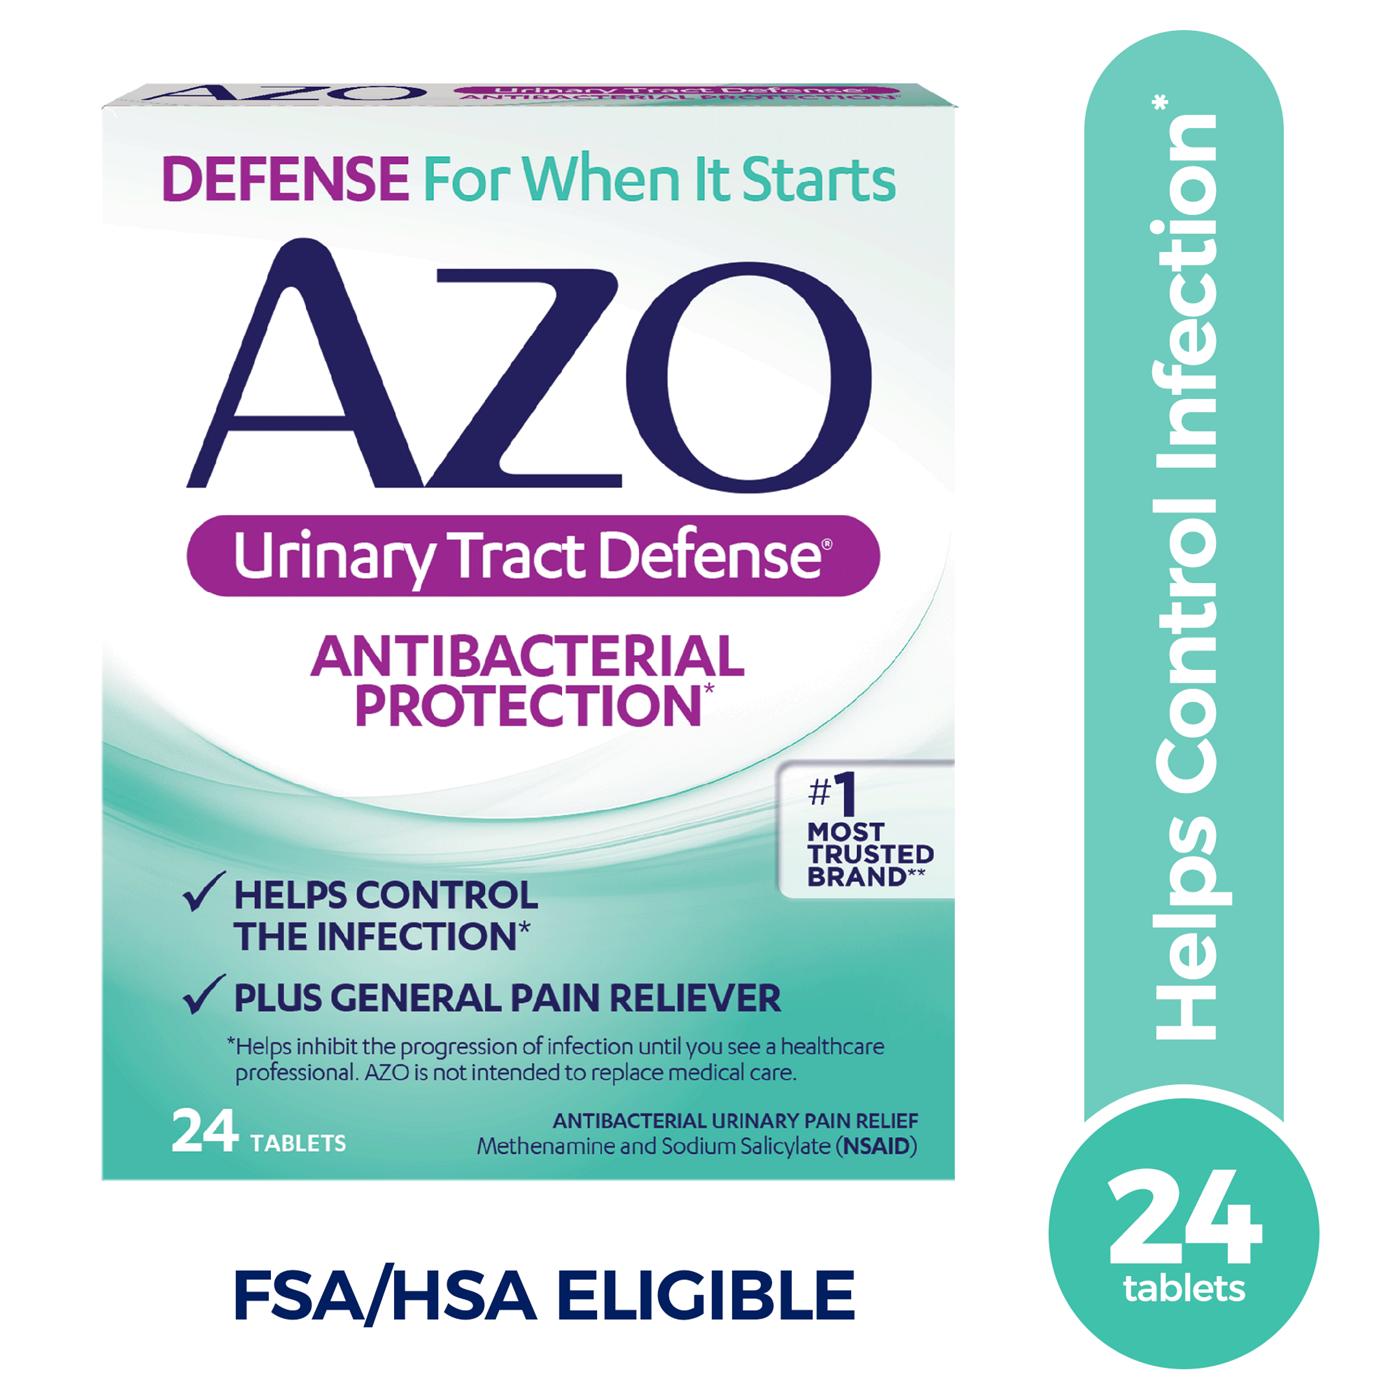 Azo Urinary Tract Defense; image 2 of 6